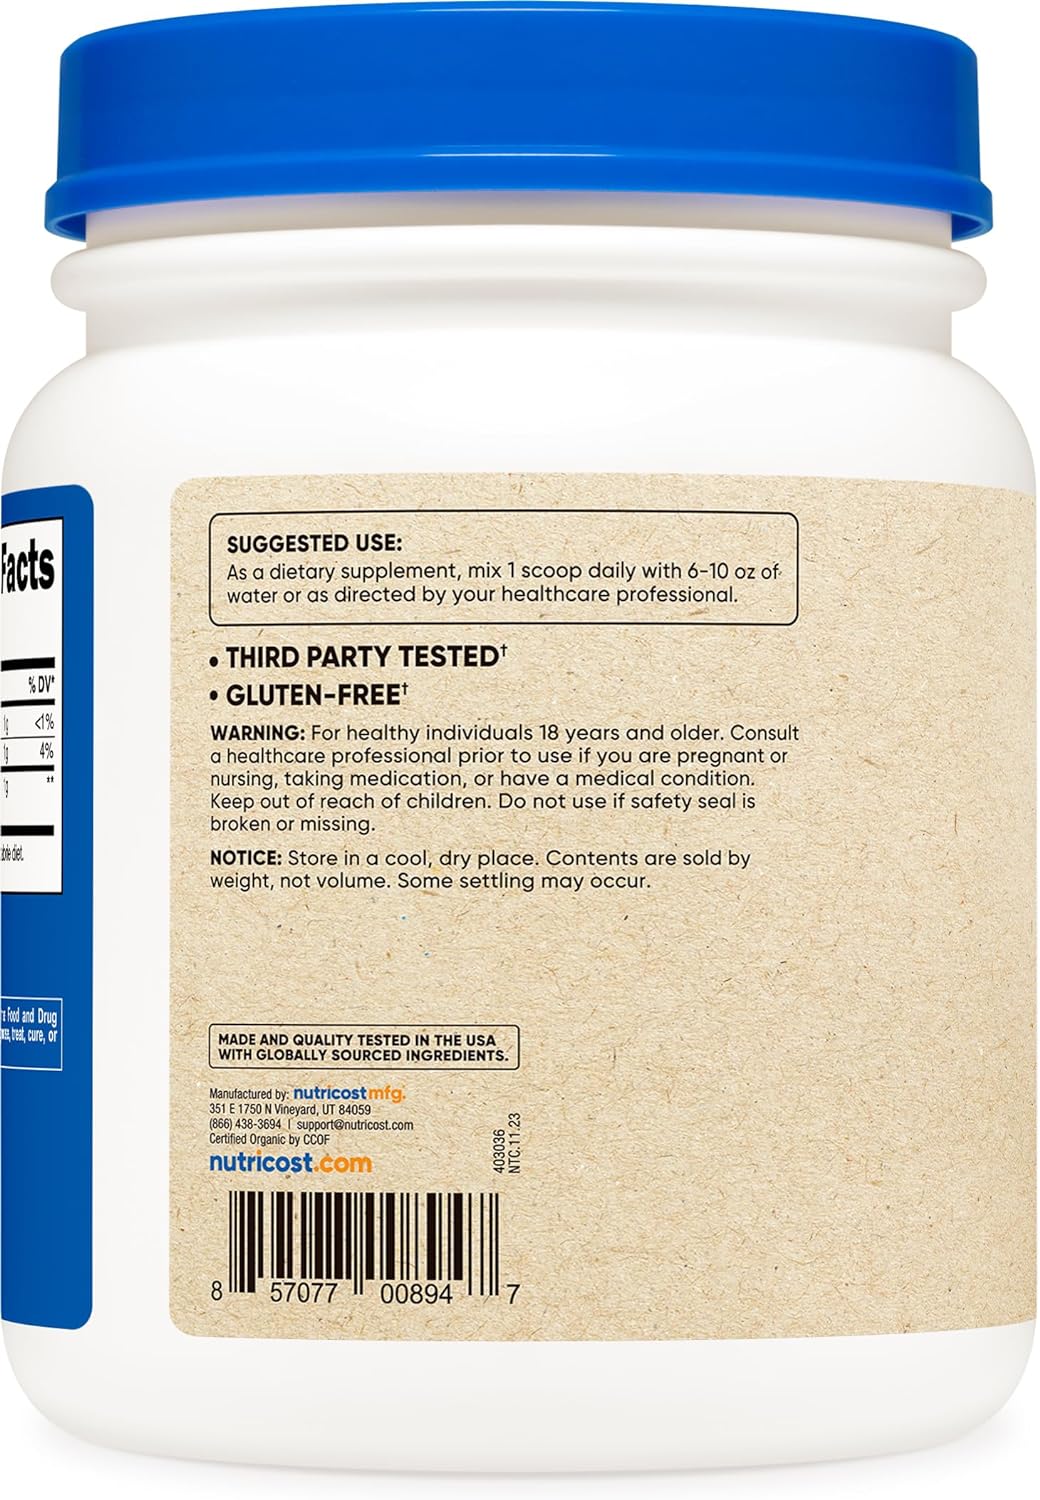 Nutricost Organic Alfalfa Powder 1LB - USDA Certified 100% Organic, Ve